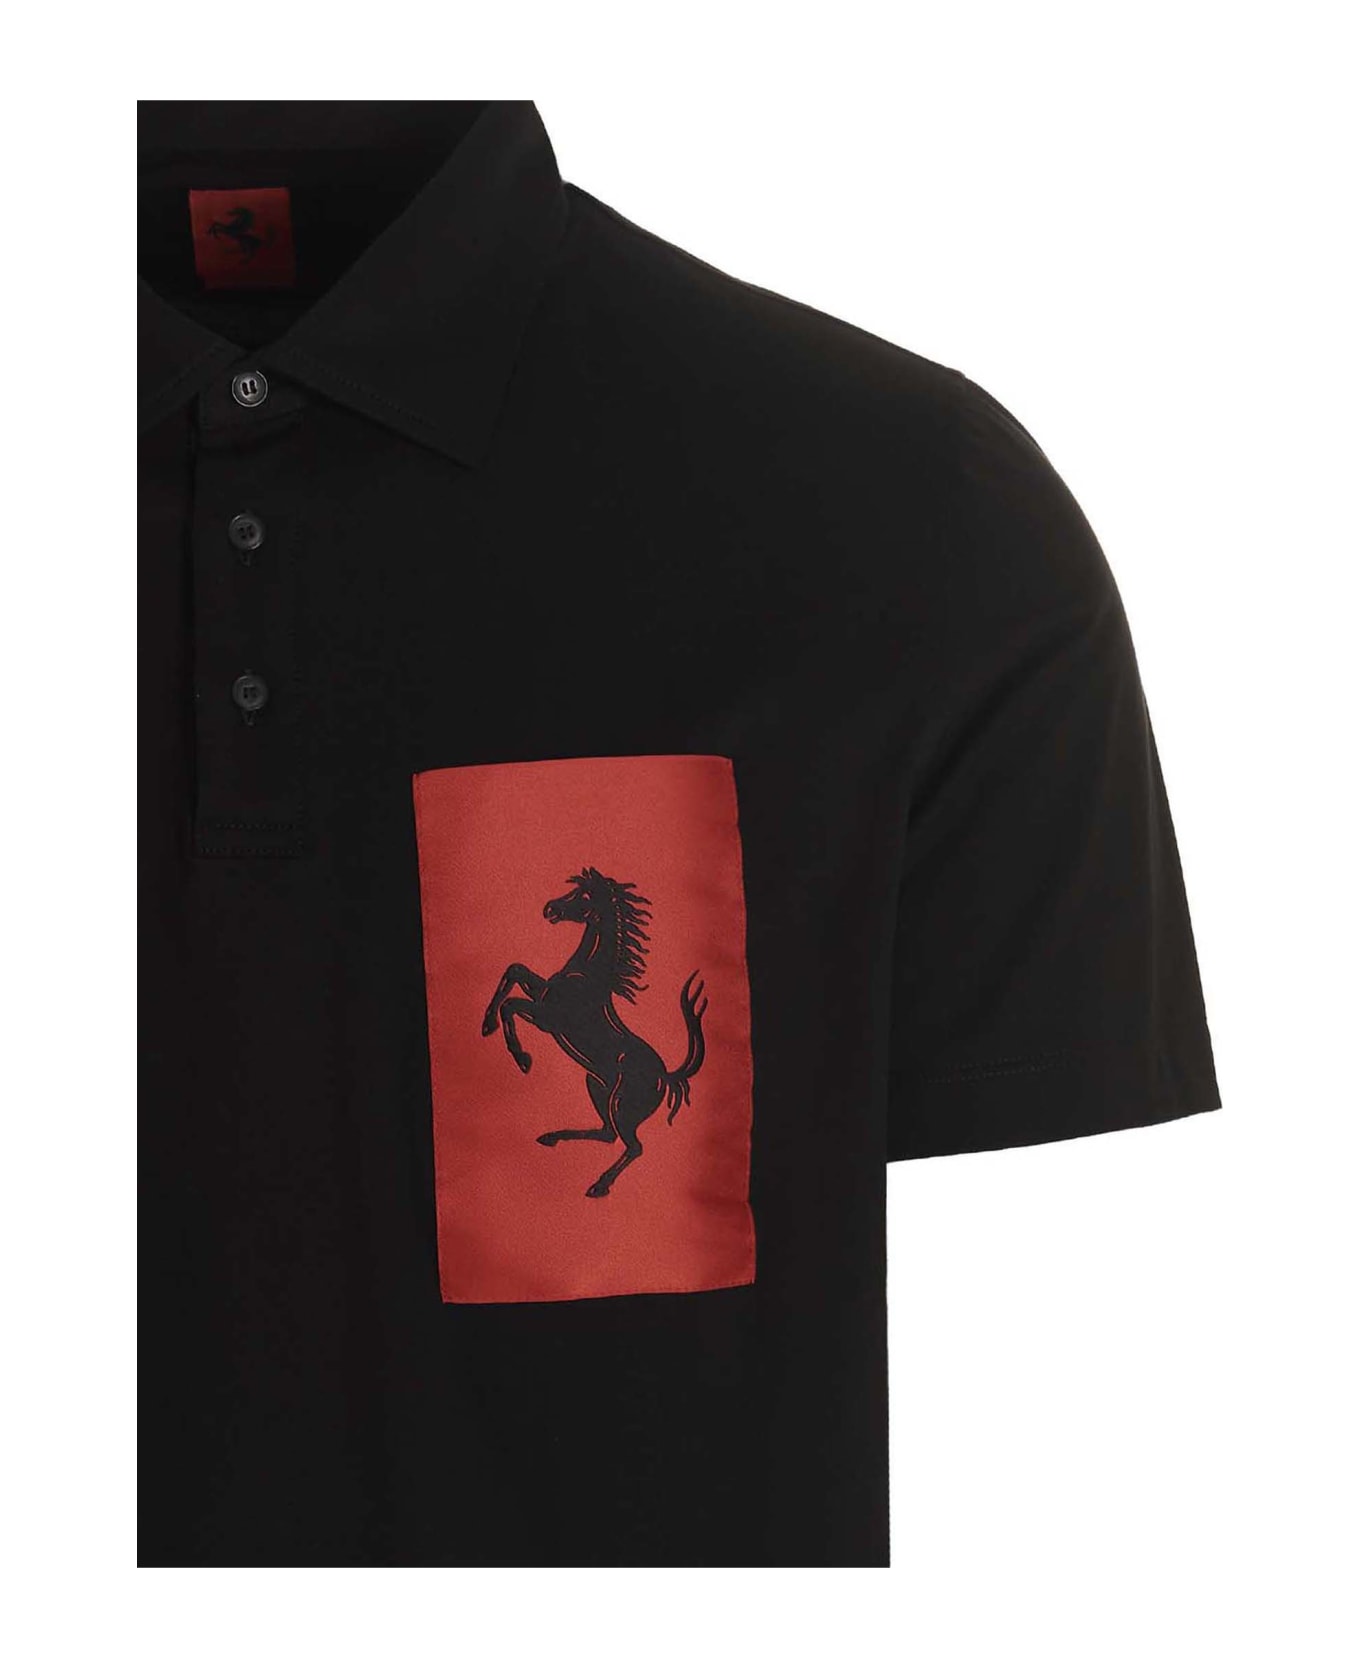 Ferrari 'label Pocket' Polo Shirt - Black  